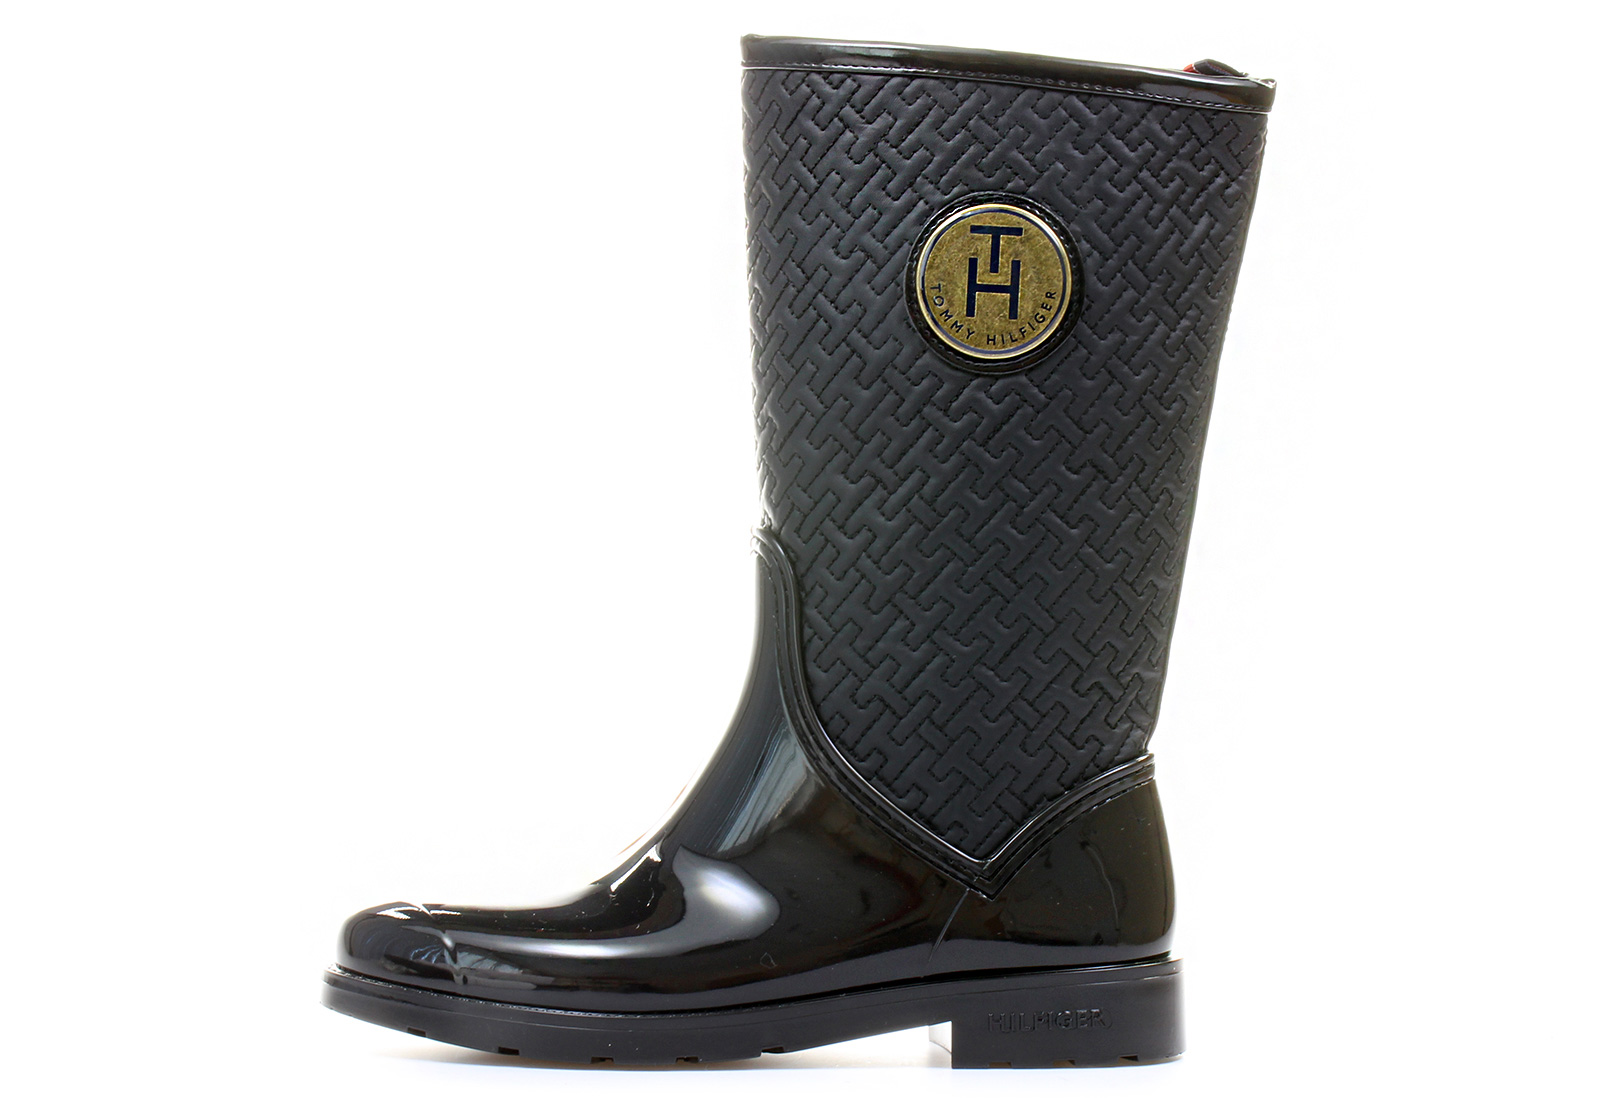 Tommy Hilfiger Boots - Oxford 15 D - 13f-6053-990 - Online shop for ...